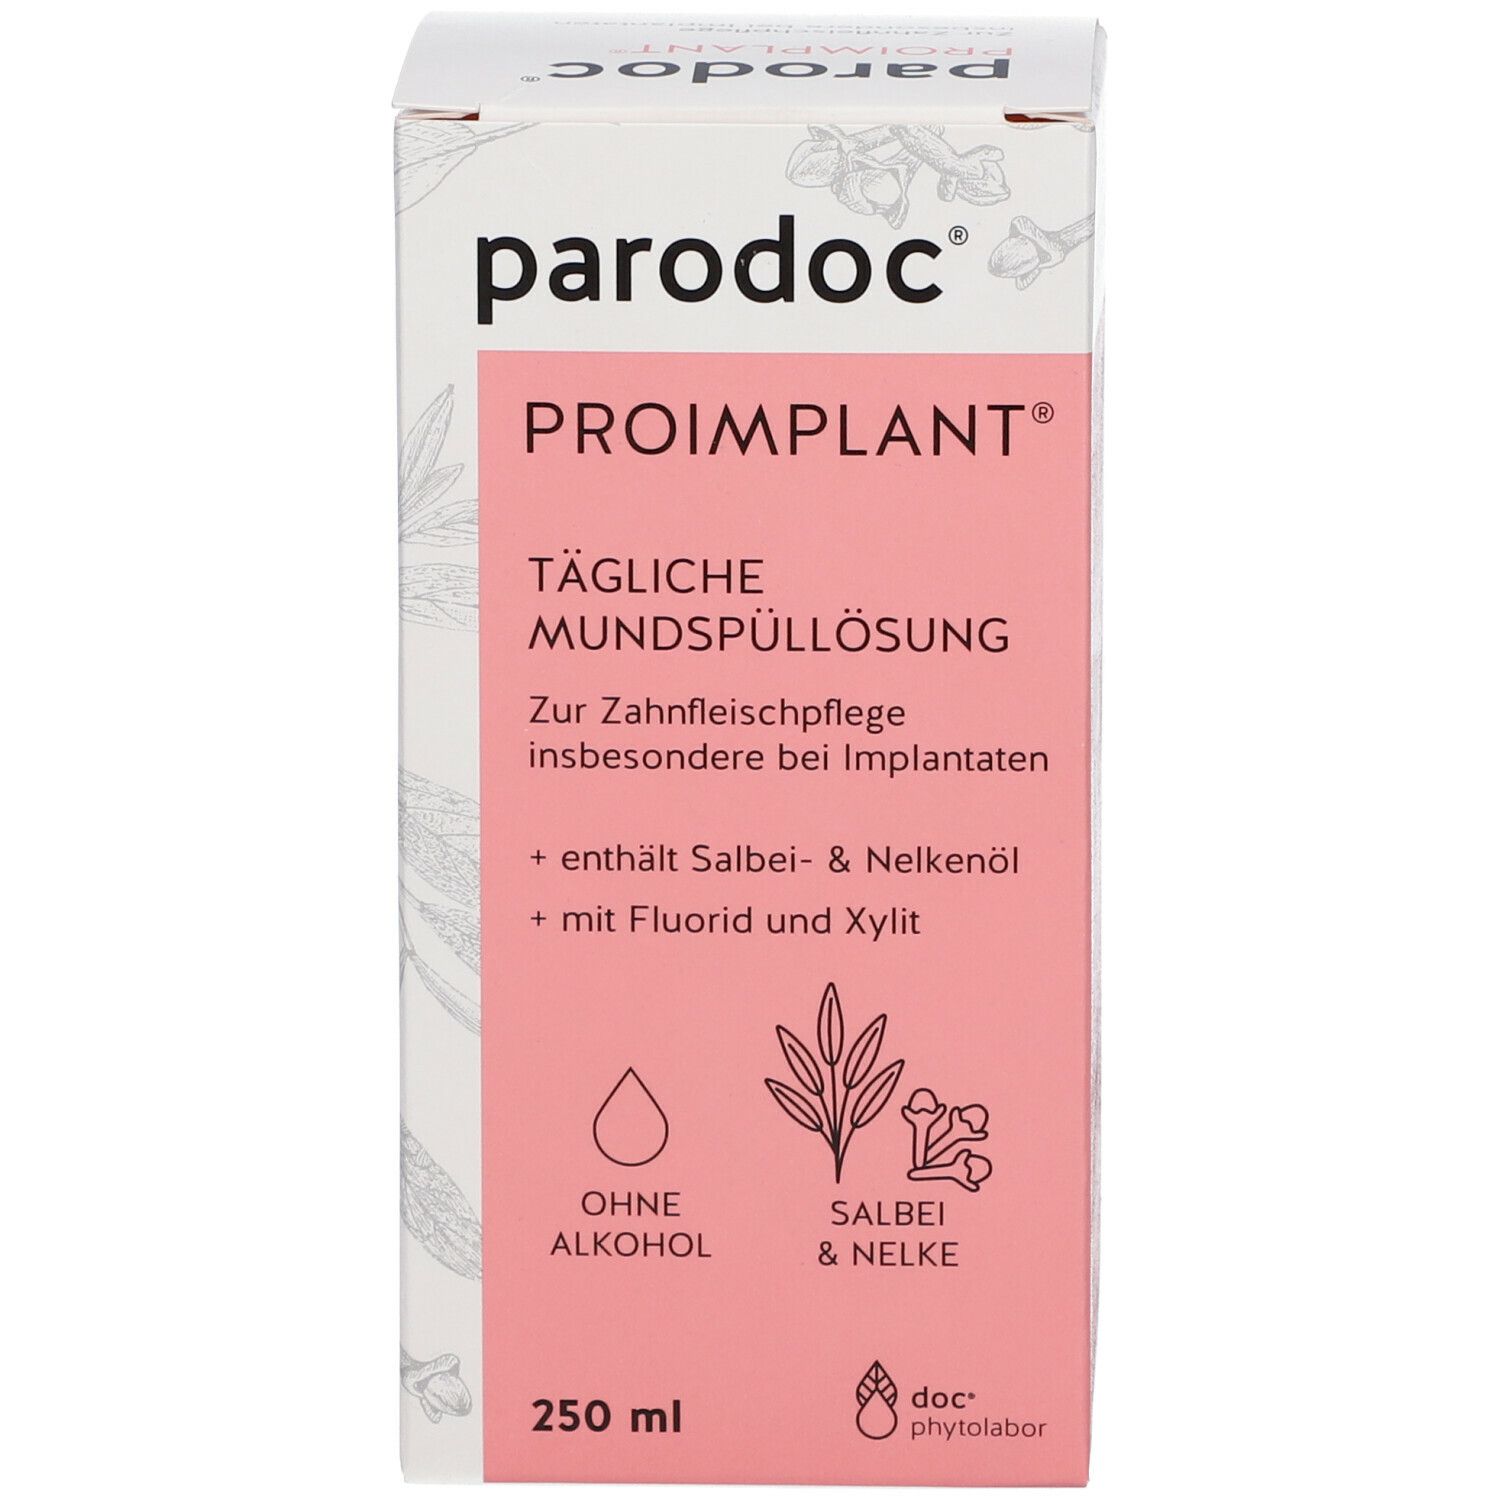 parodoc® PROIMPLANT®